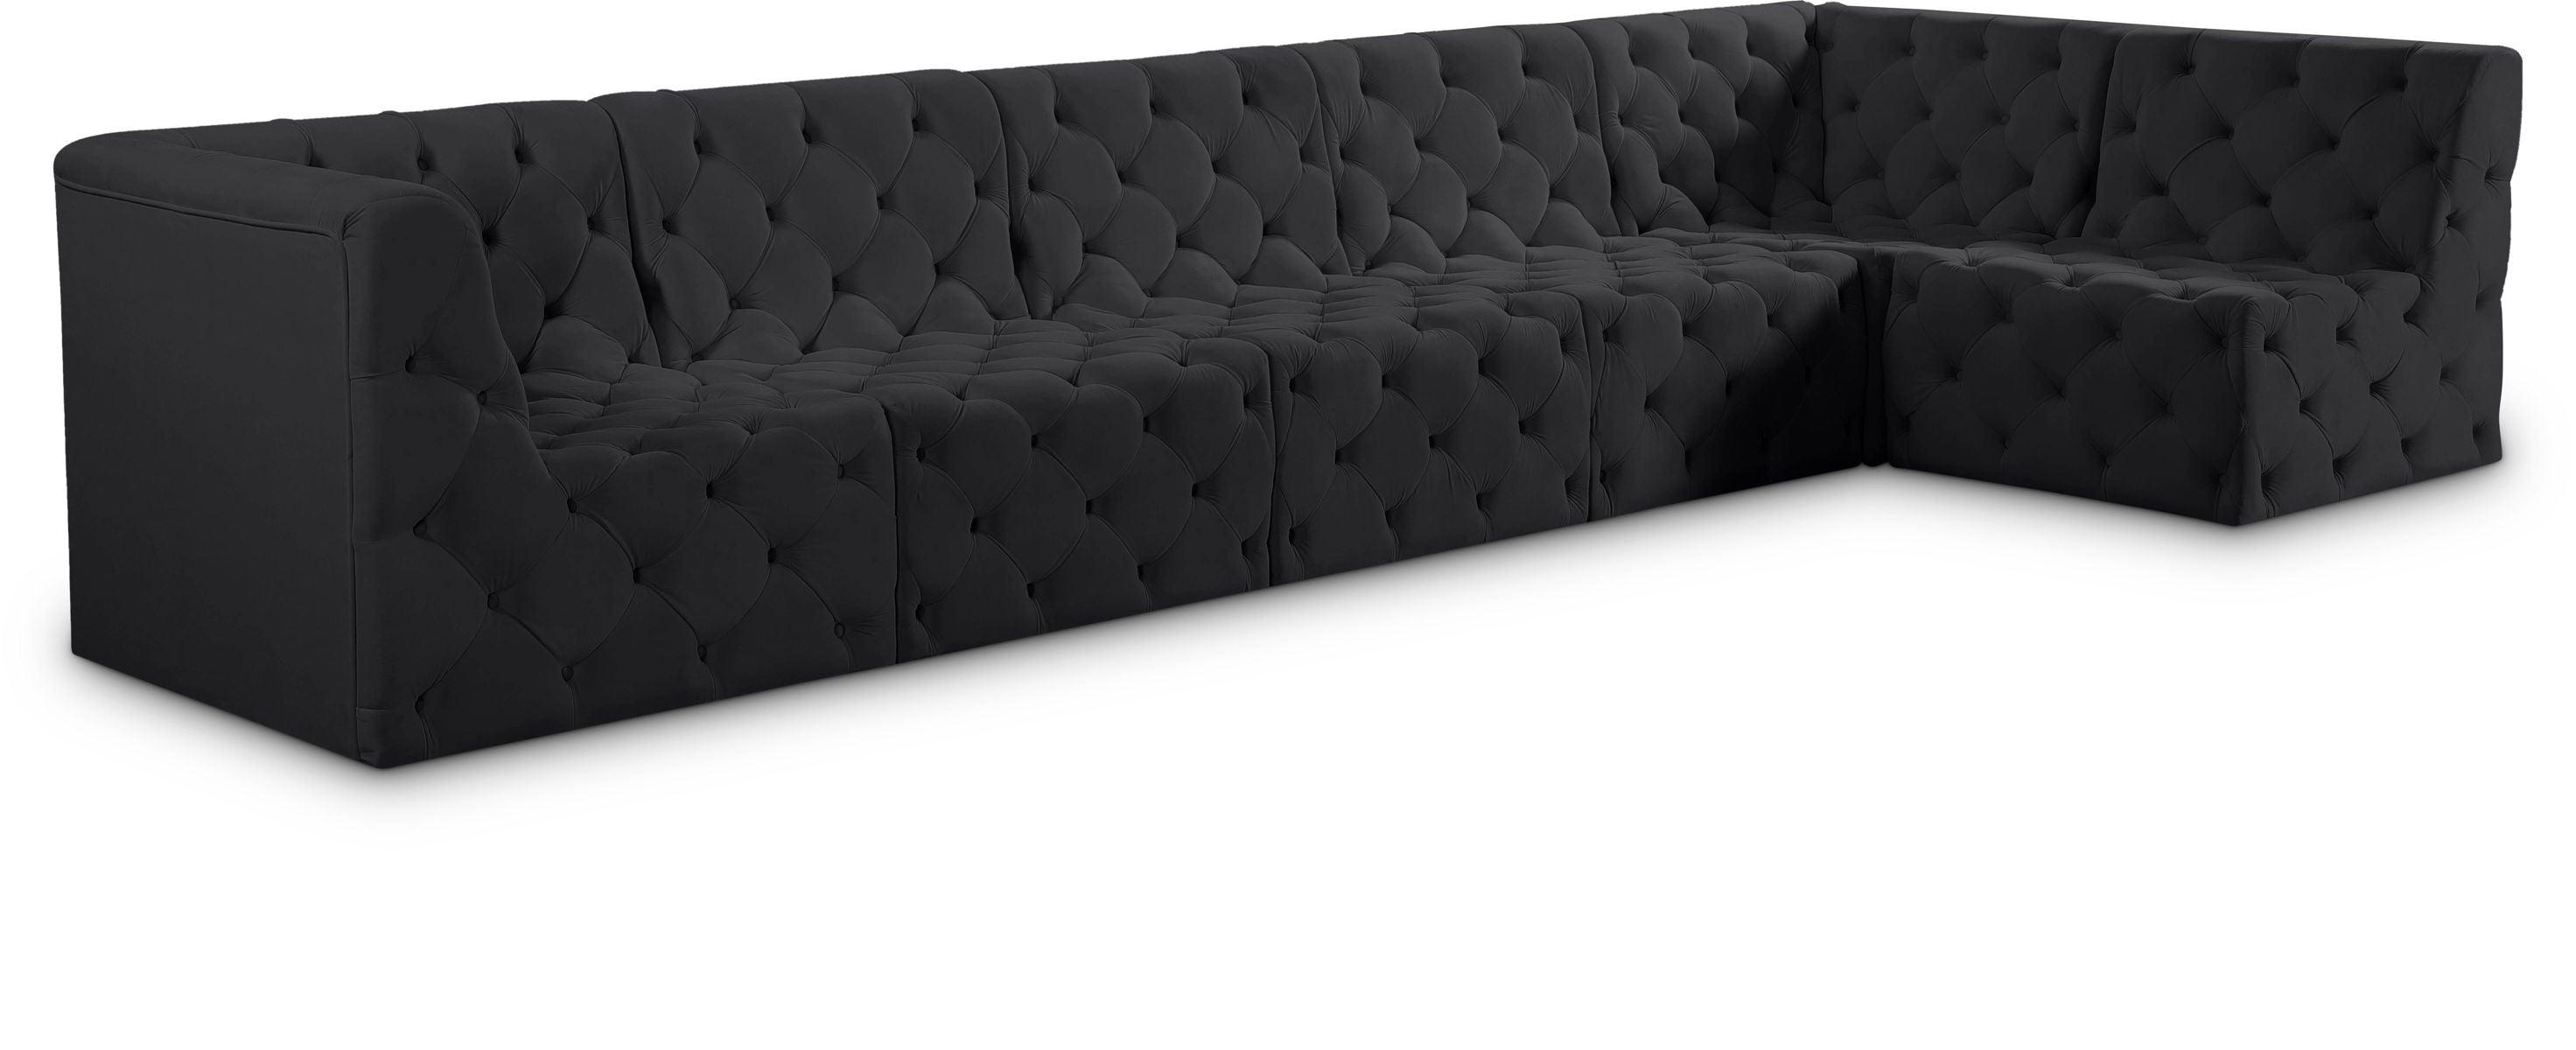 Meridian Furniture - Tuft - Modular Sectional 6 Piece - Black - 5th Avenue Furniture